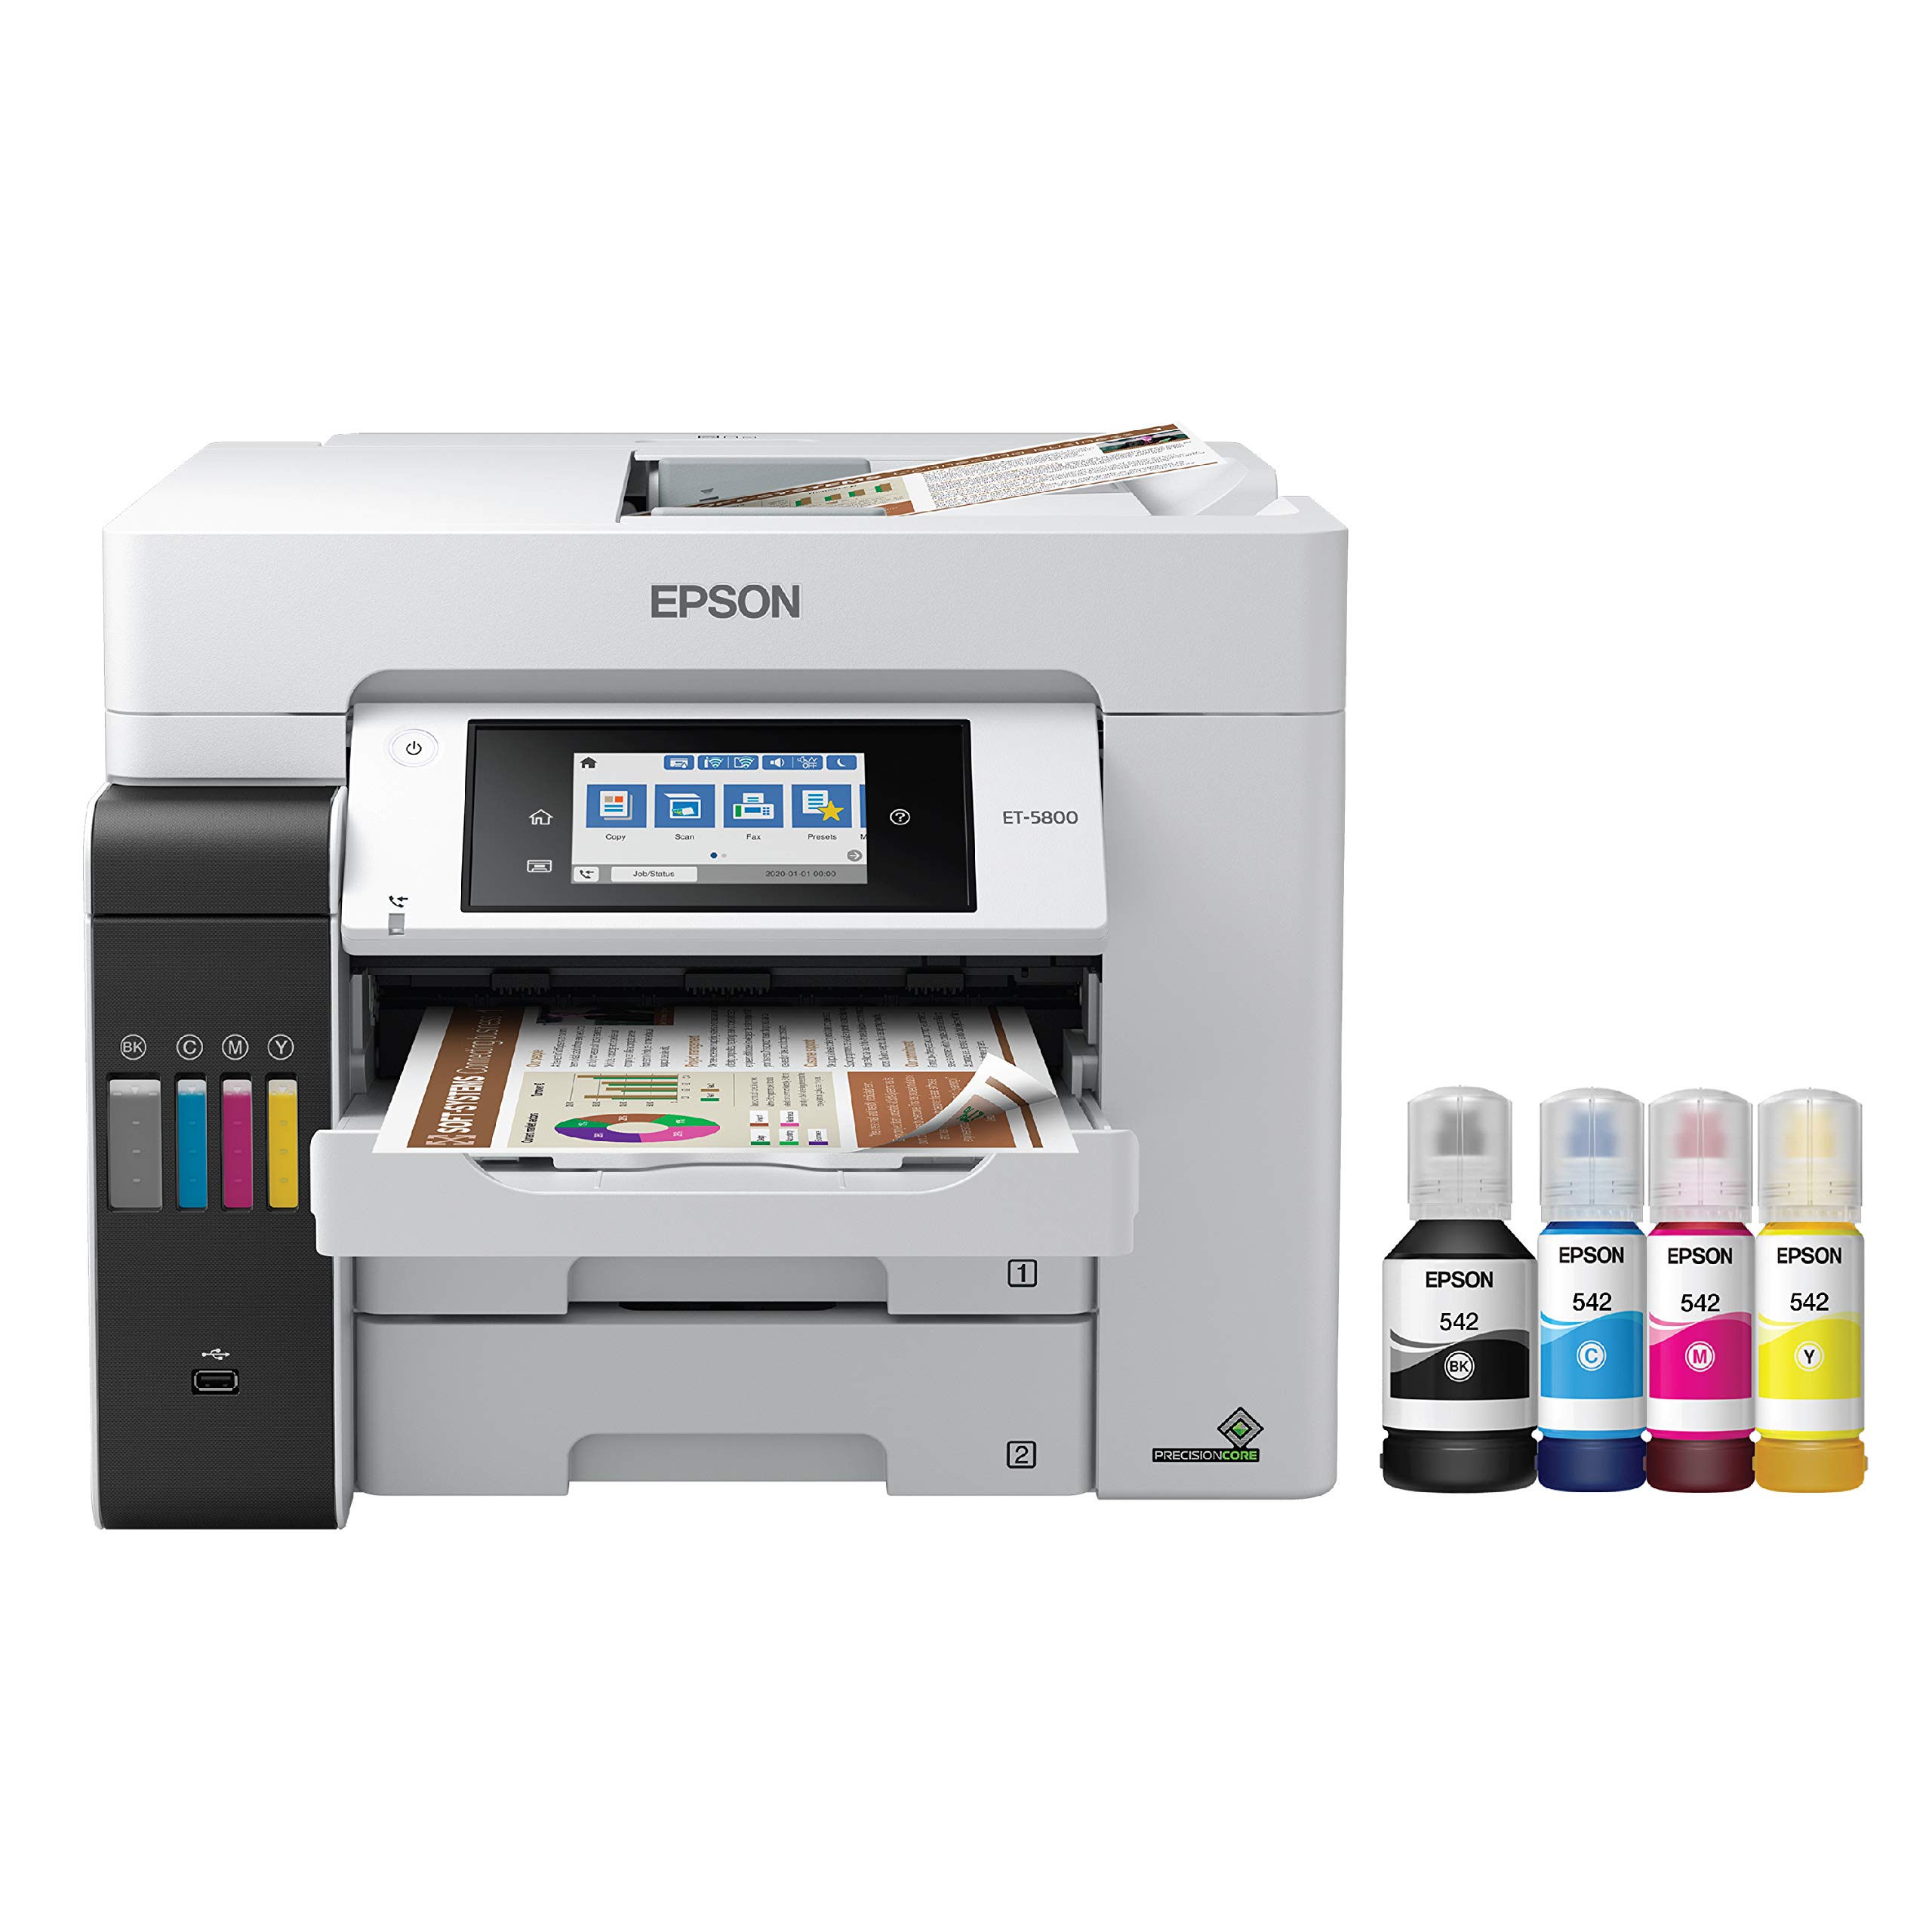 Epson EcoTank Pro ET-5800 impressora multifuncional multifuncional colorida sem fio com scanner